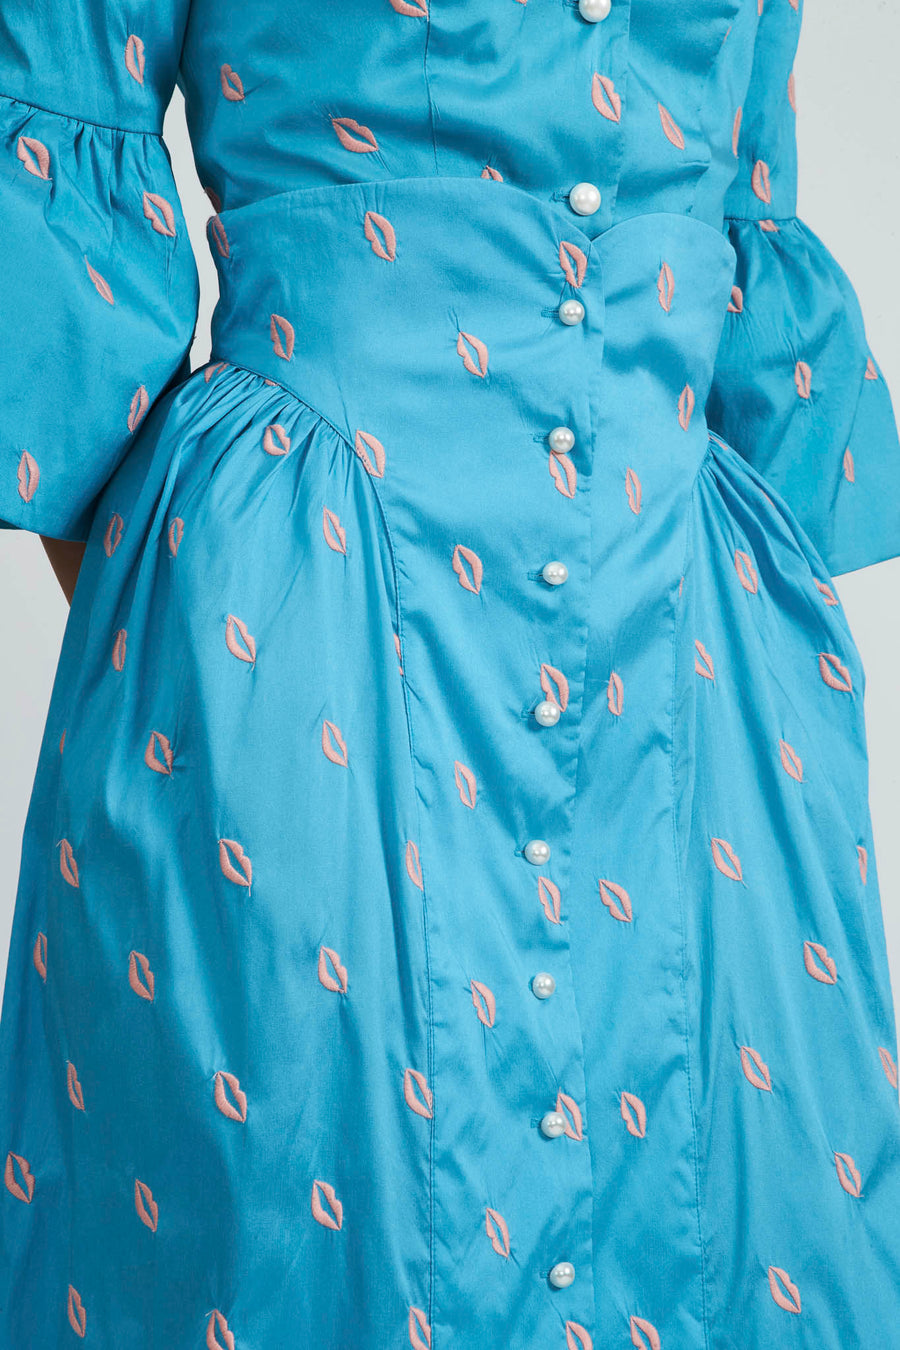 BATSHEVA - Bella Skirt in Turquoise Taffeta with Embroidered Lips